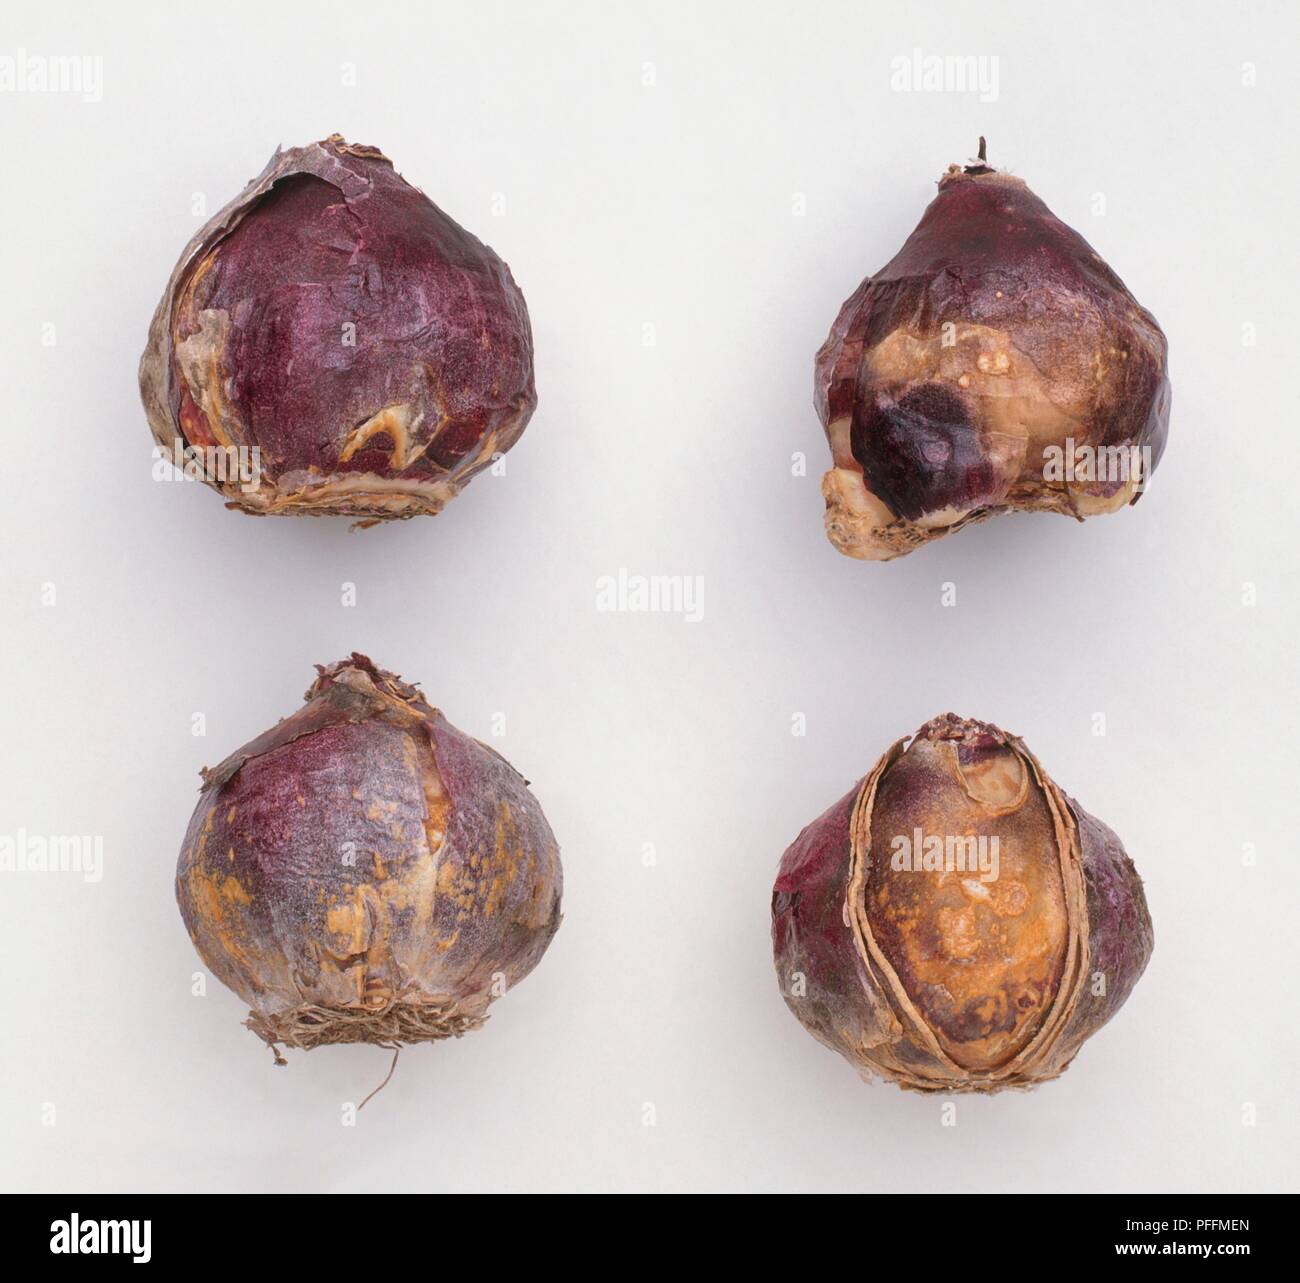 Damaged and diseased hyacinth bulbs Stock Photo